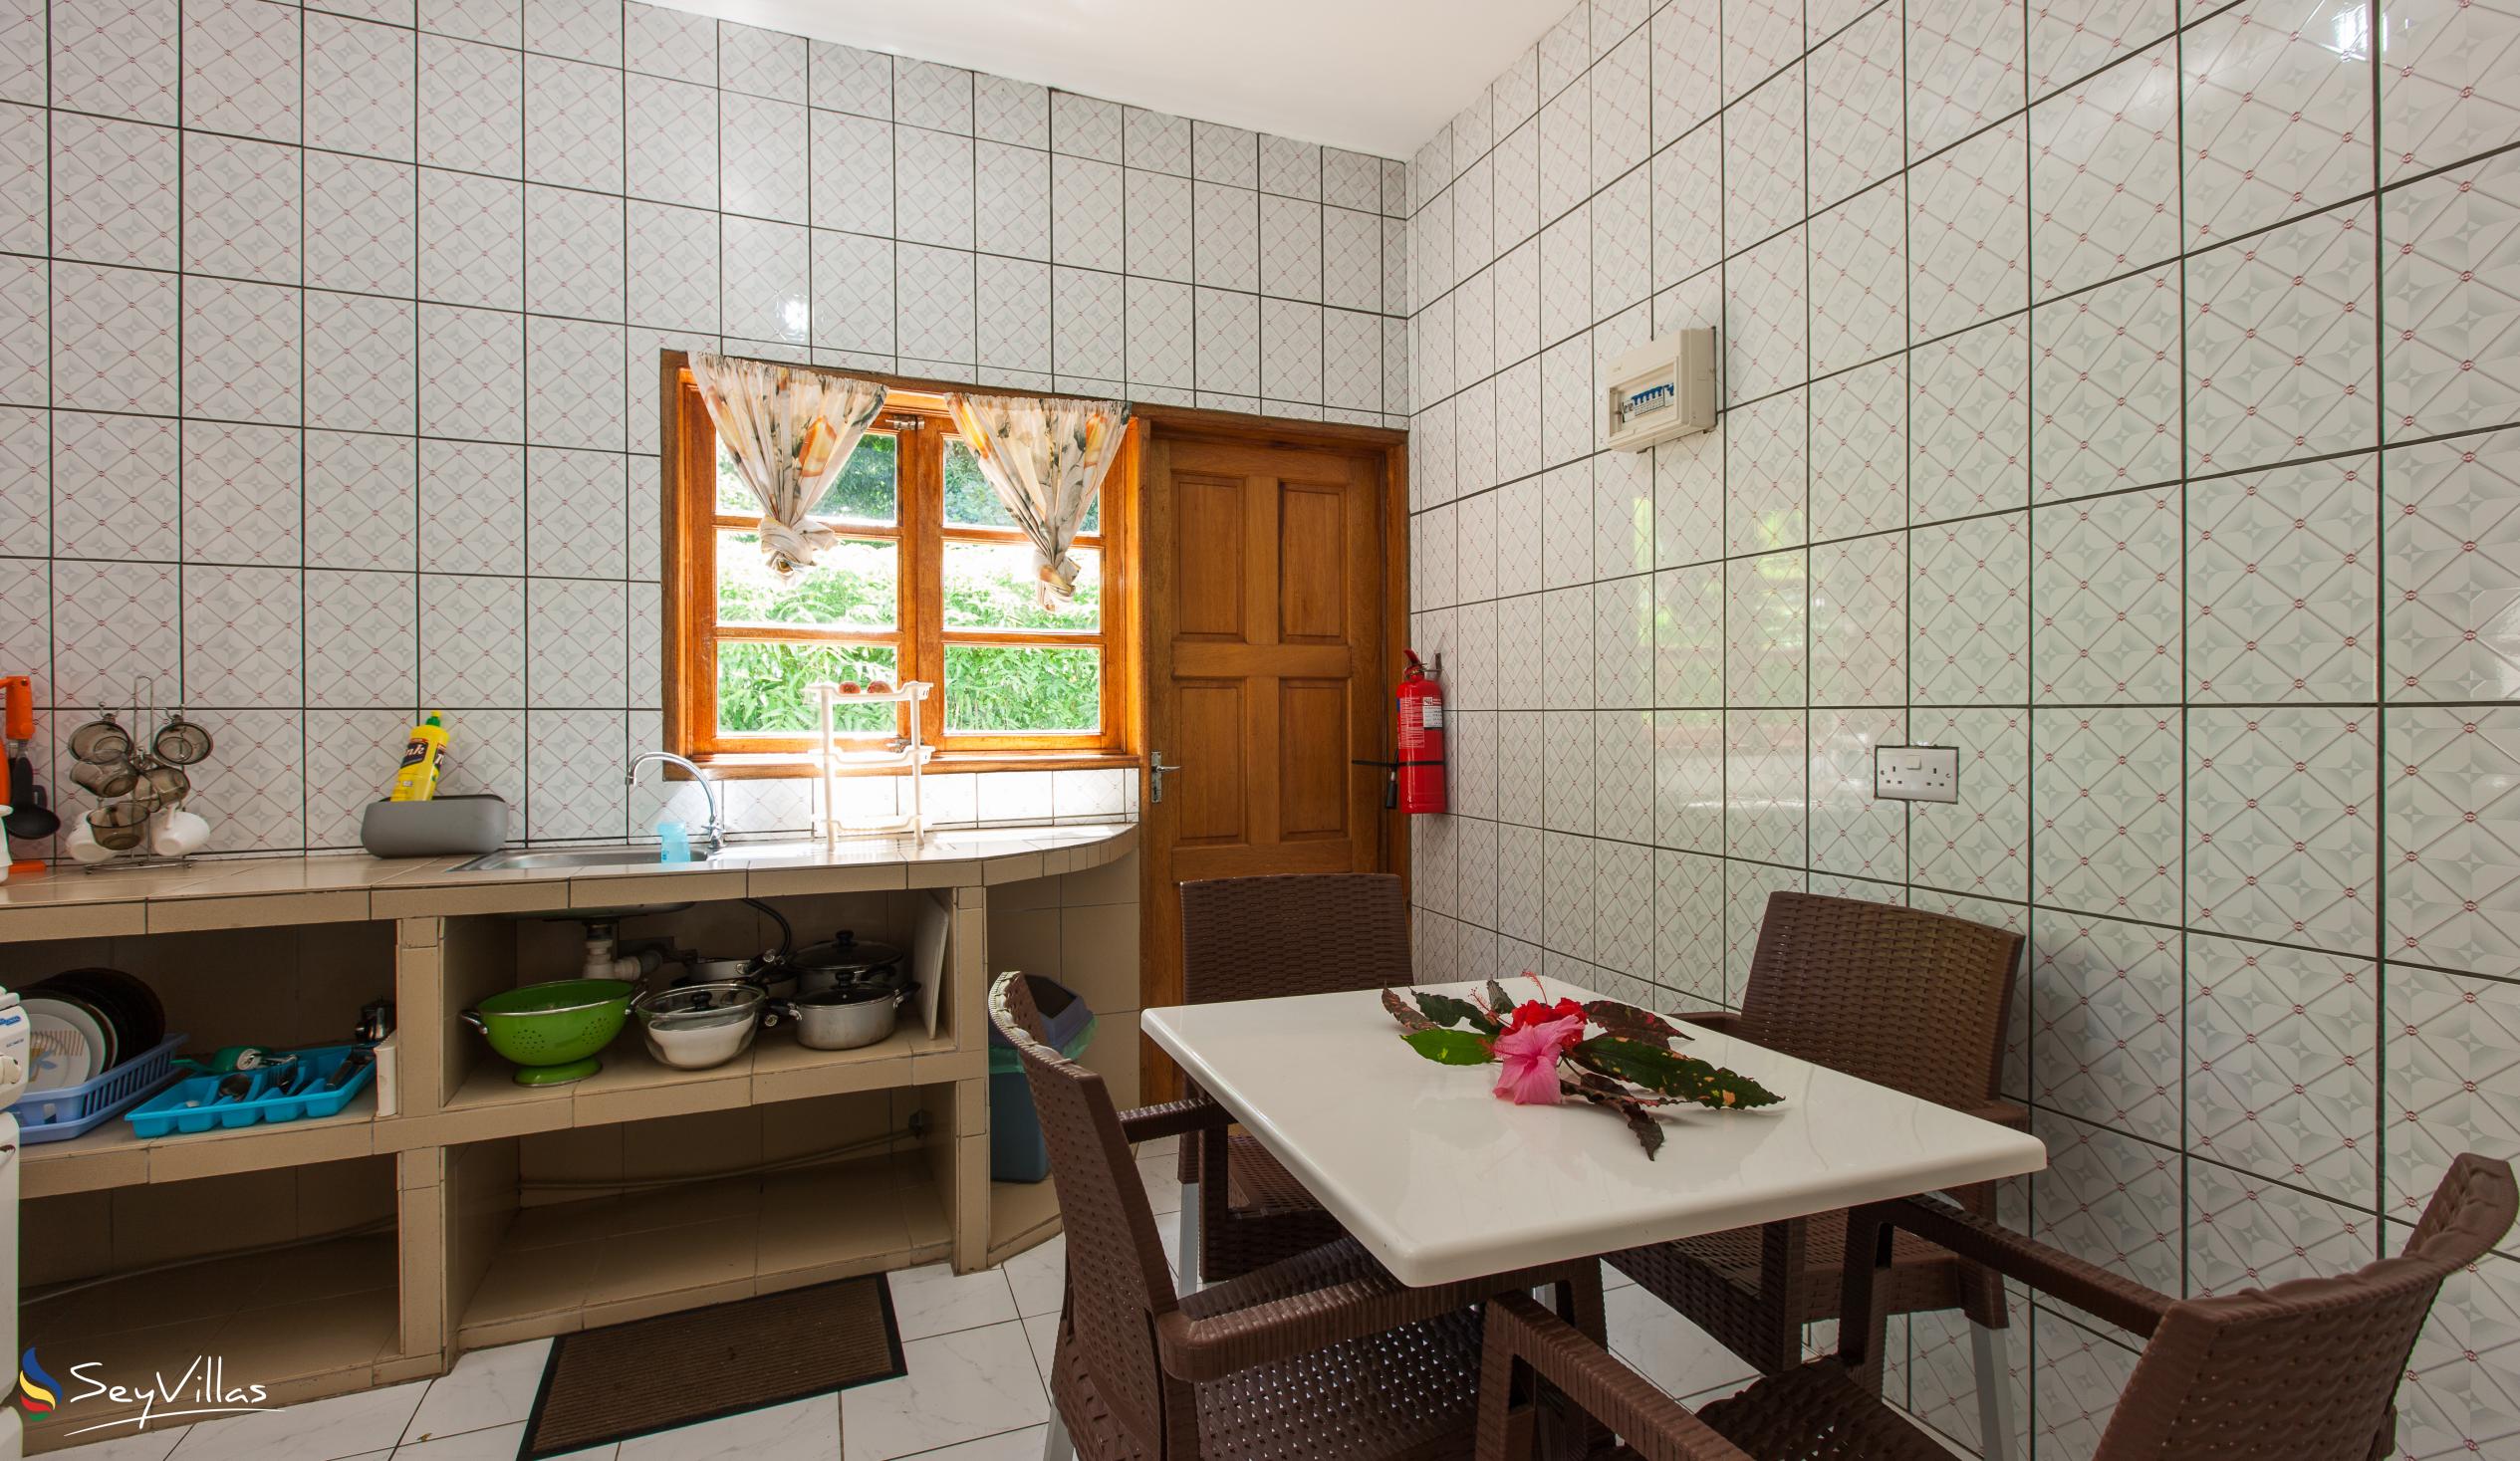 Foto 40: Tannette's Villa - Innenbereich - La Digue (Seychellen)